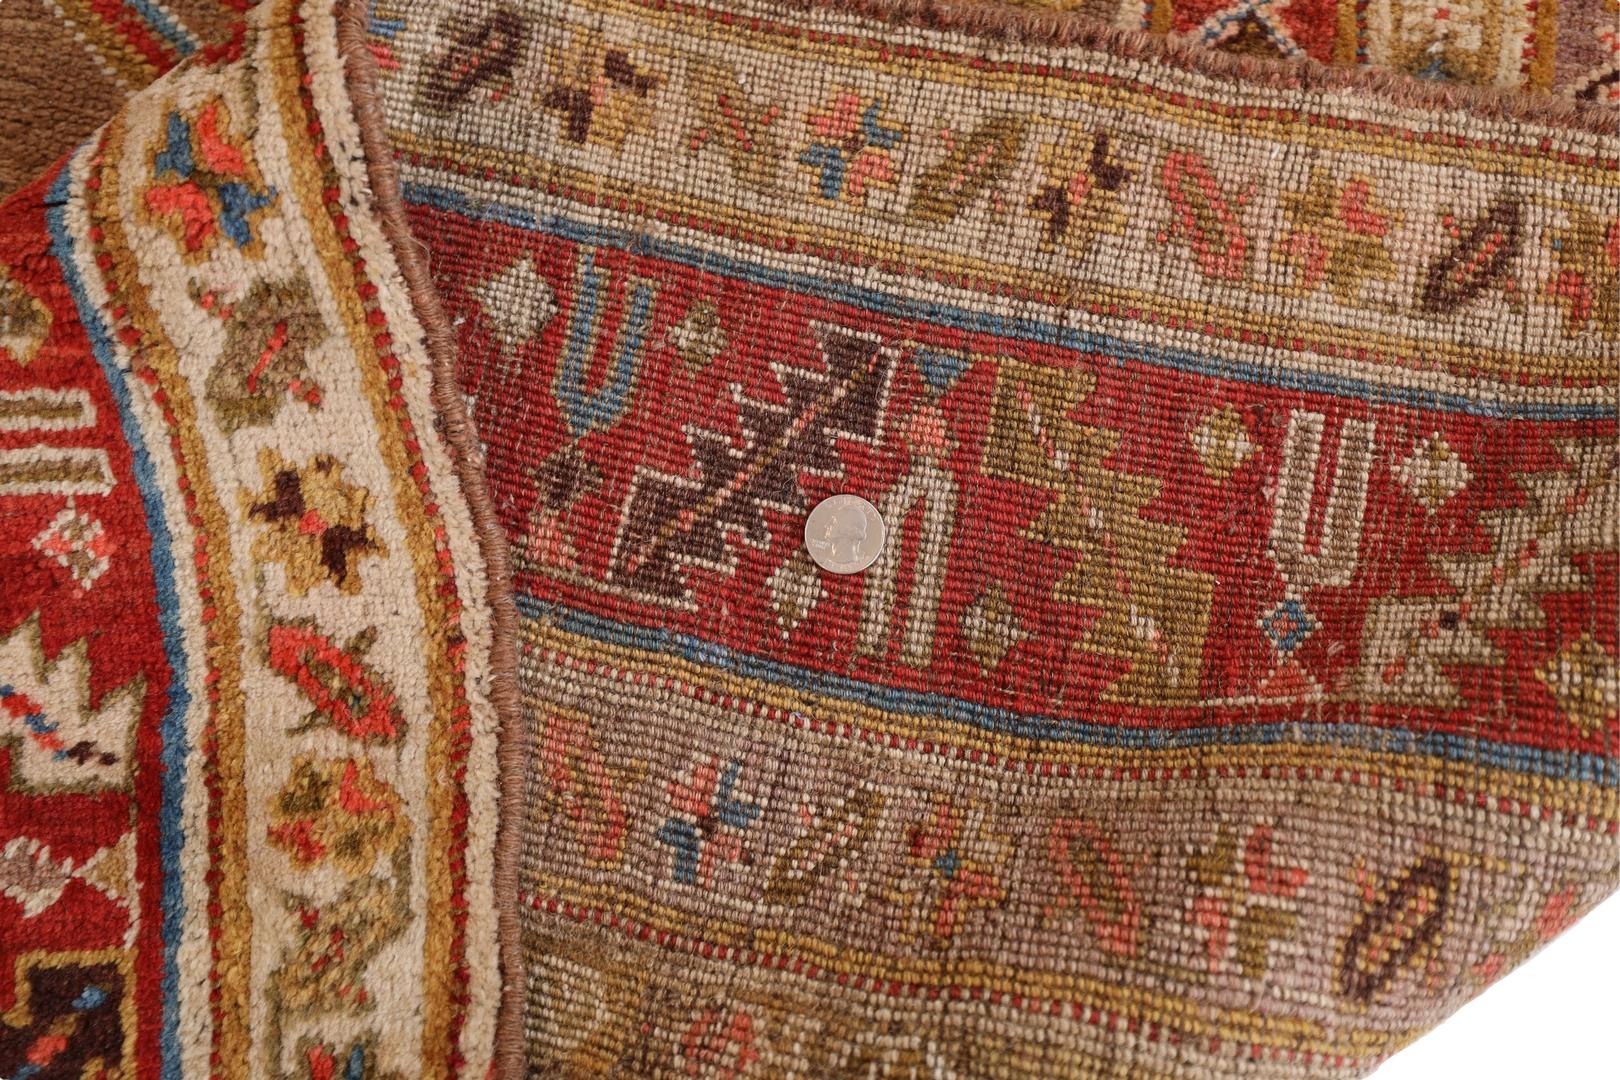 Kurd-Bidjar Antique rug, Brown Red Blue - 4'7